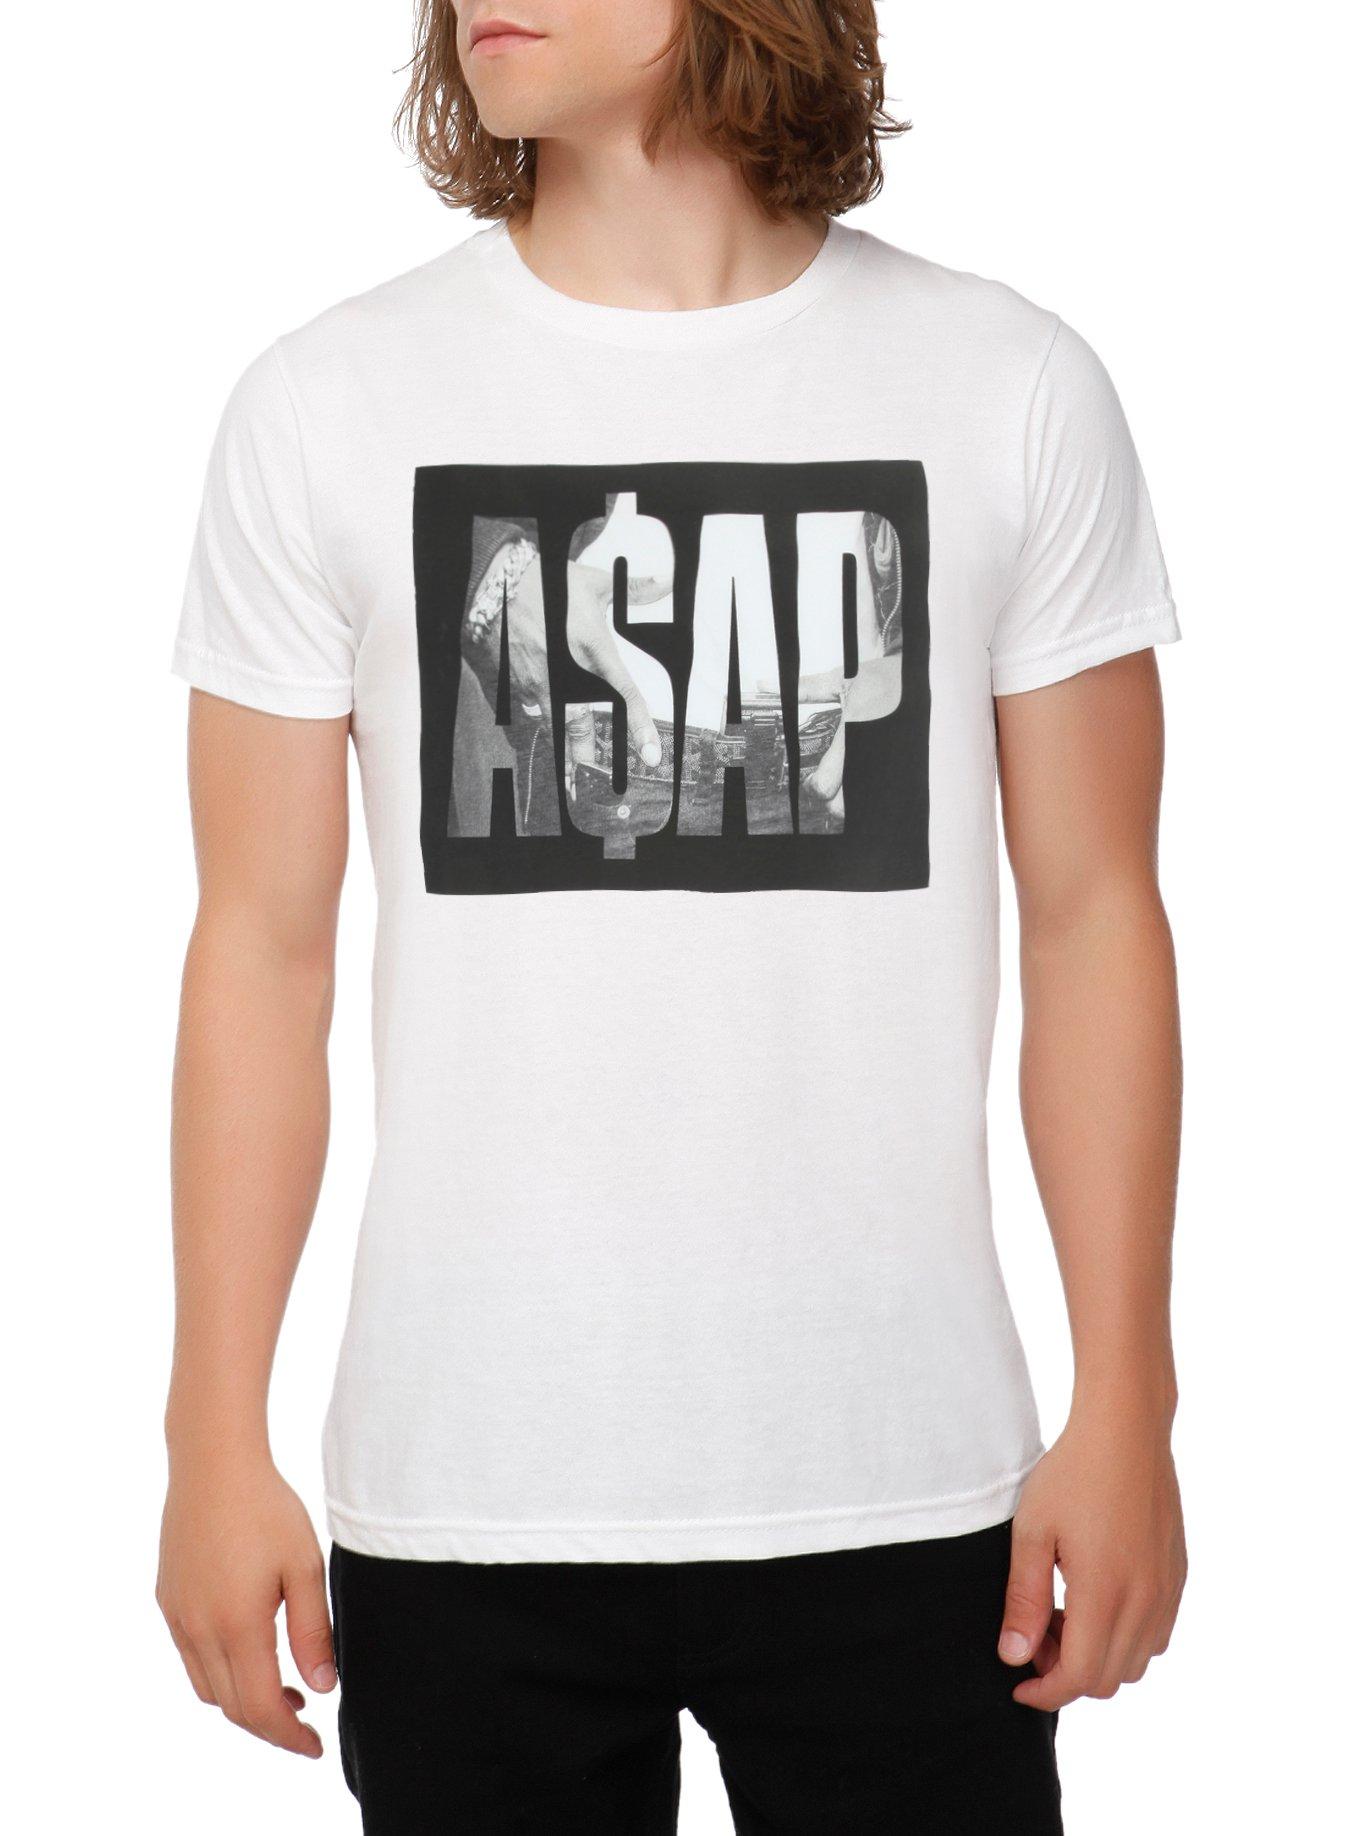 A$AP Mob T-Shirt, WHITE, hi-res